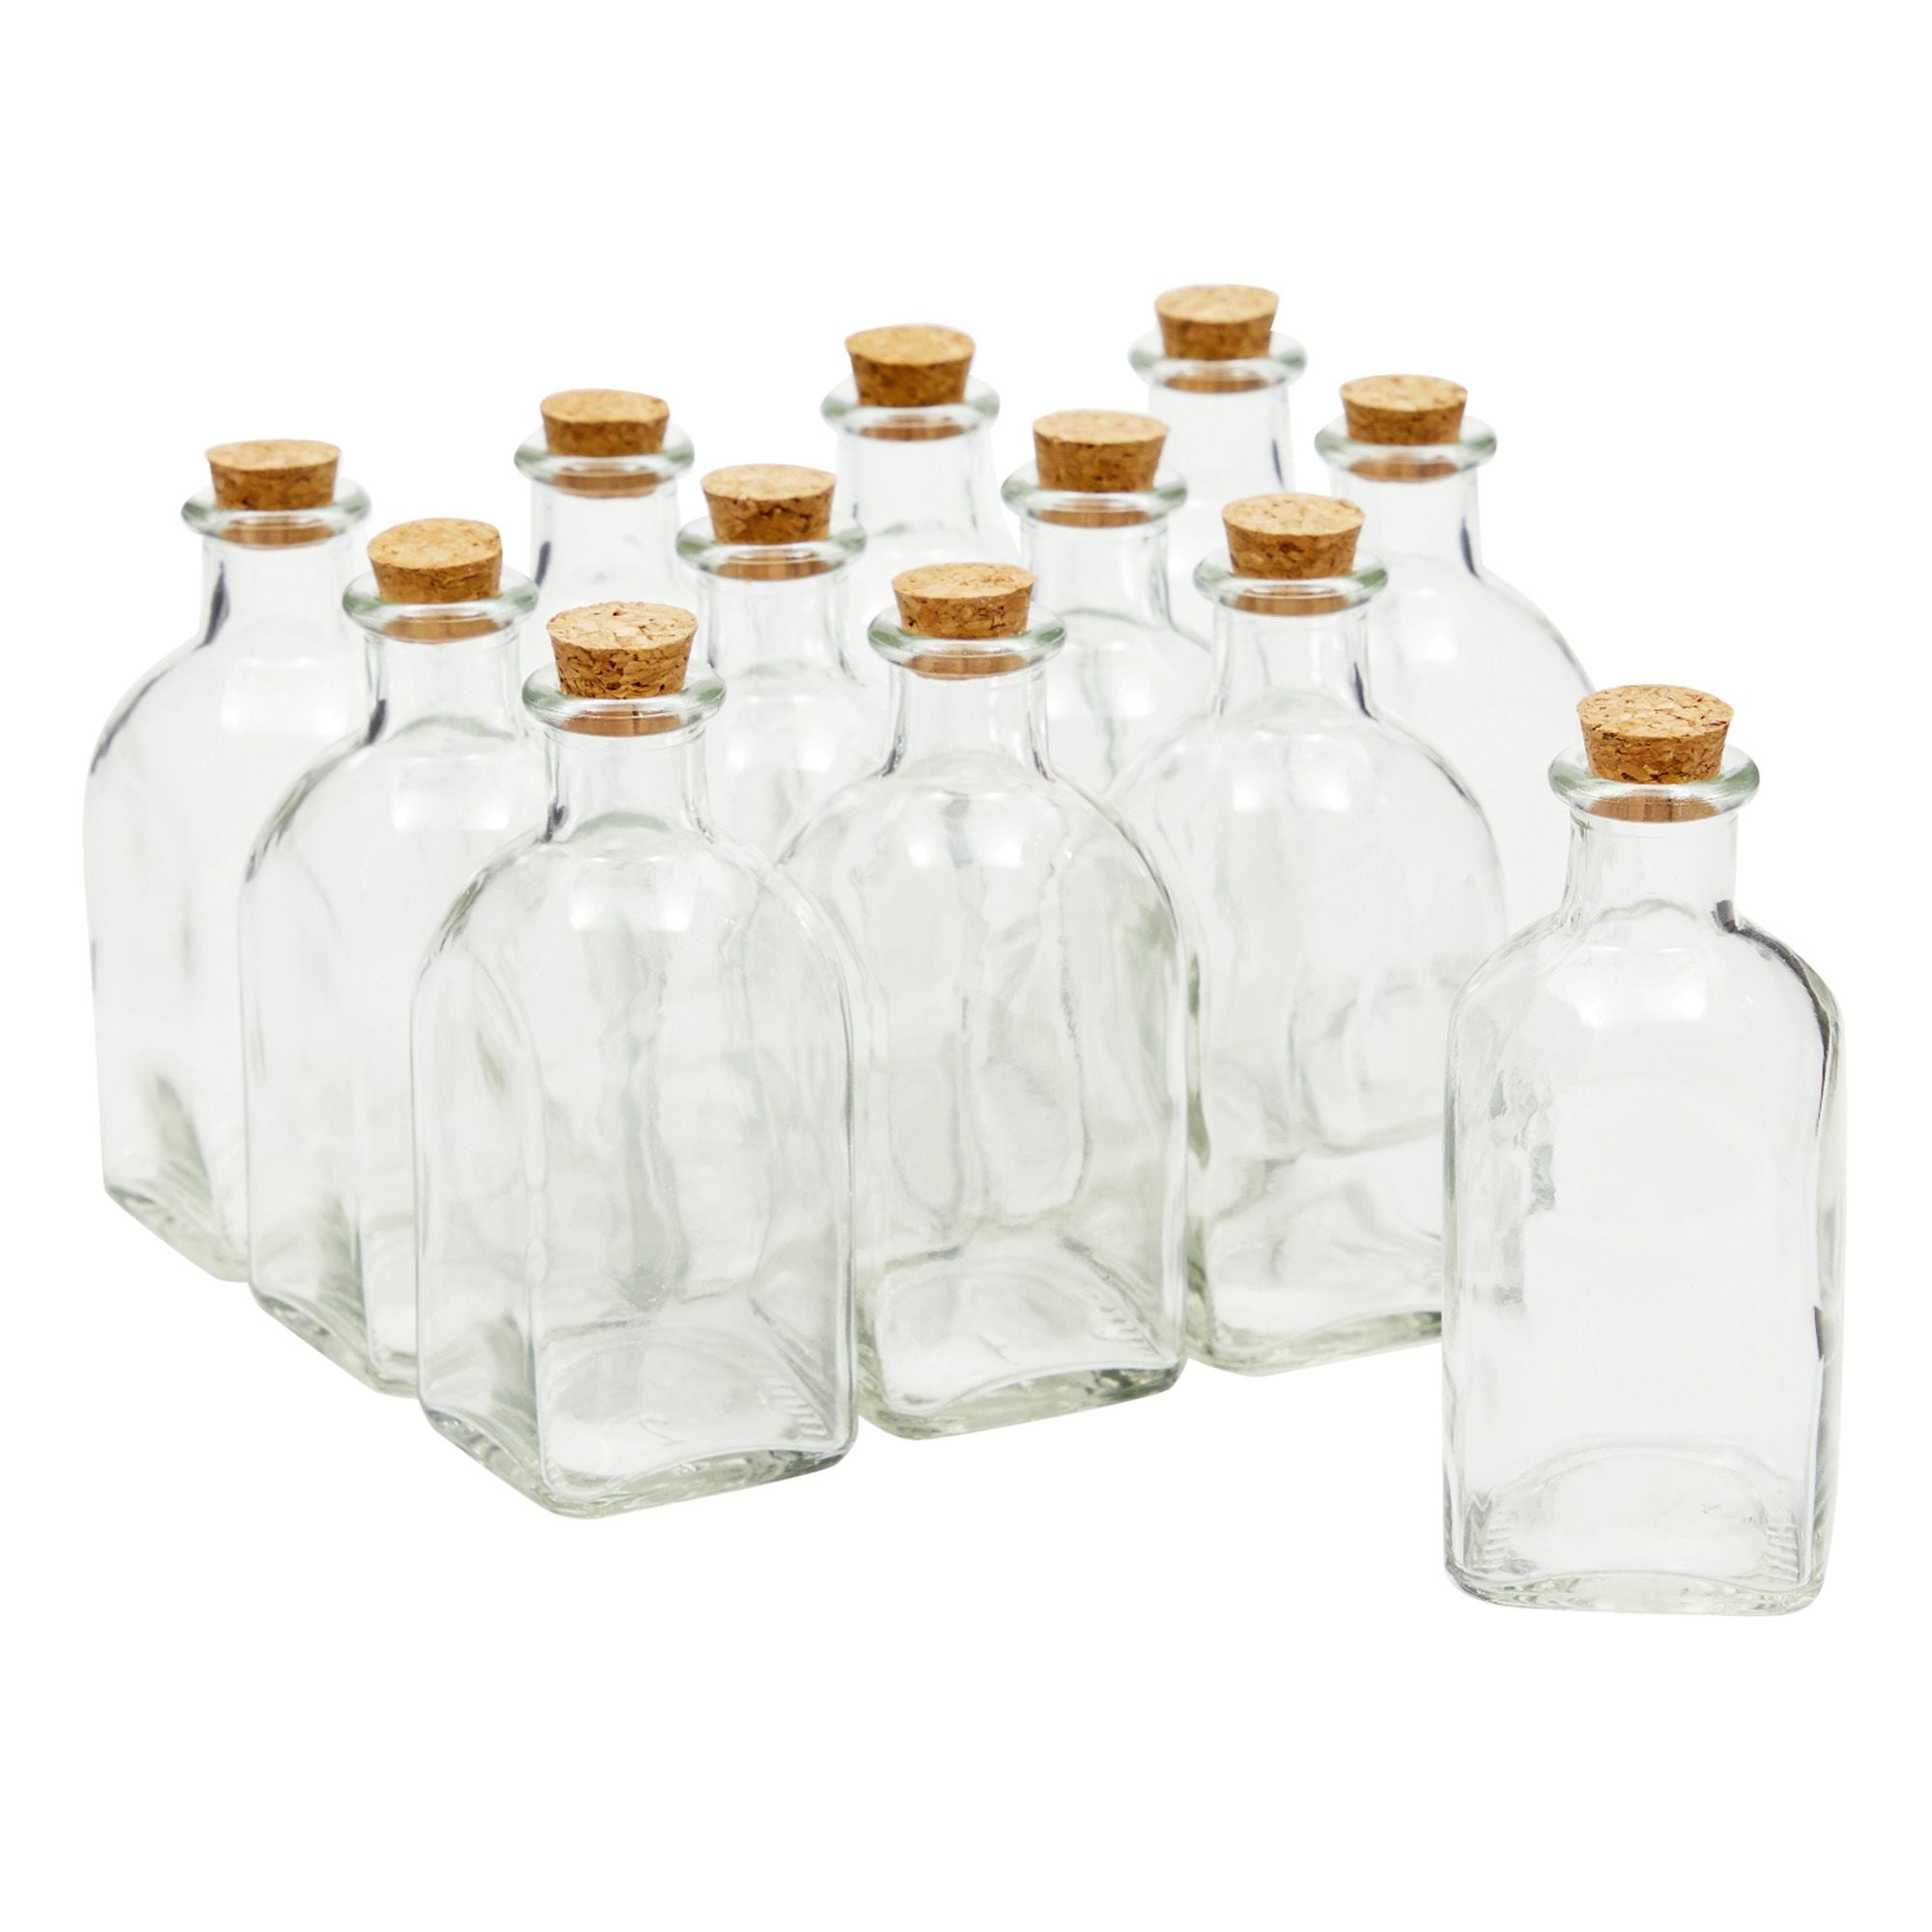 Encheng 12 Oz Glass Bottles with Cork Lids,Home Brewing Bottles